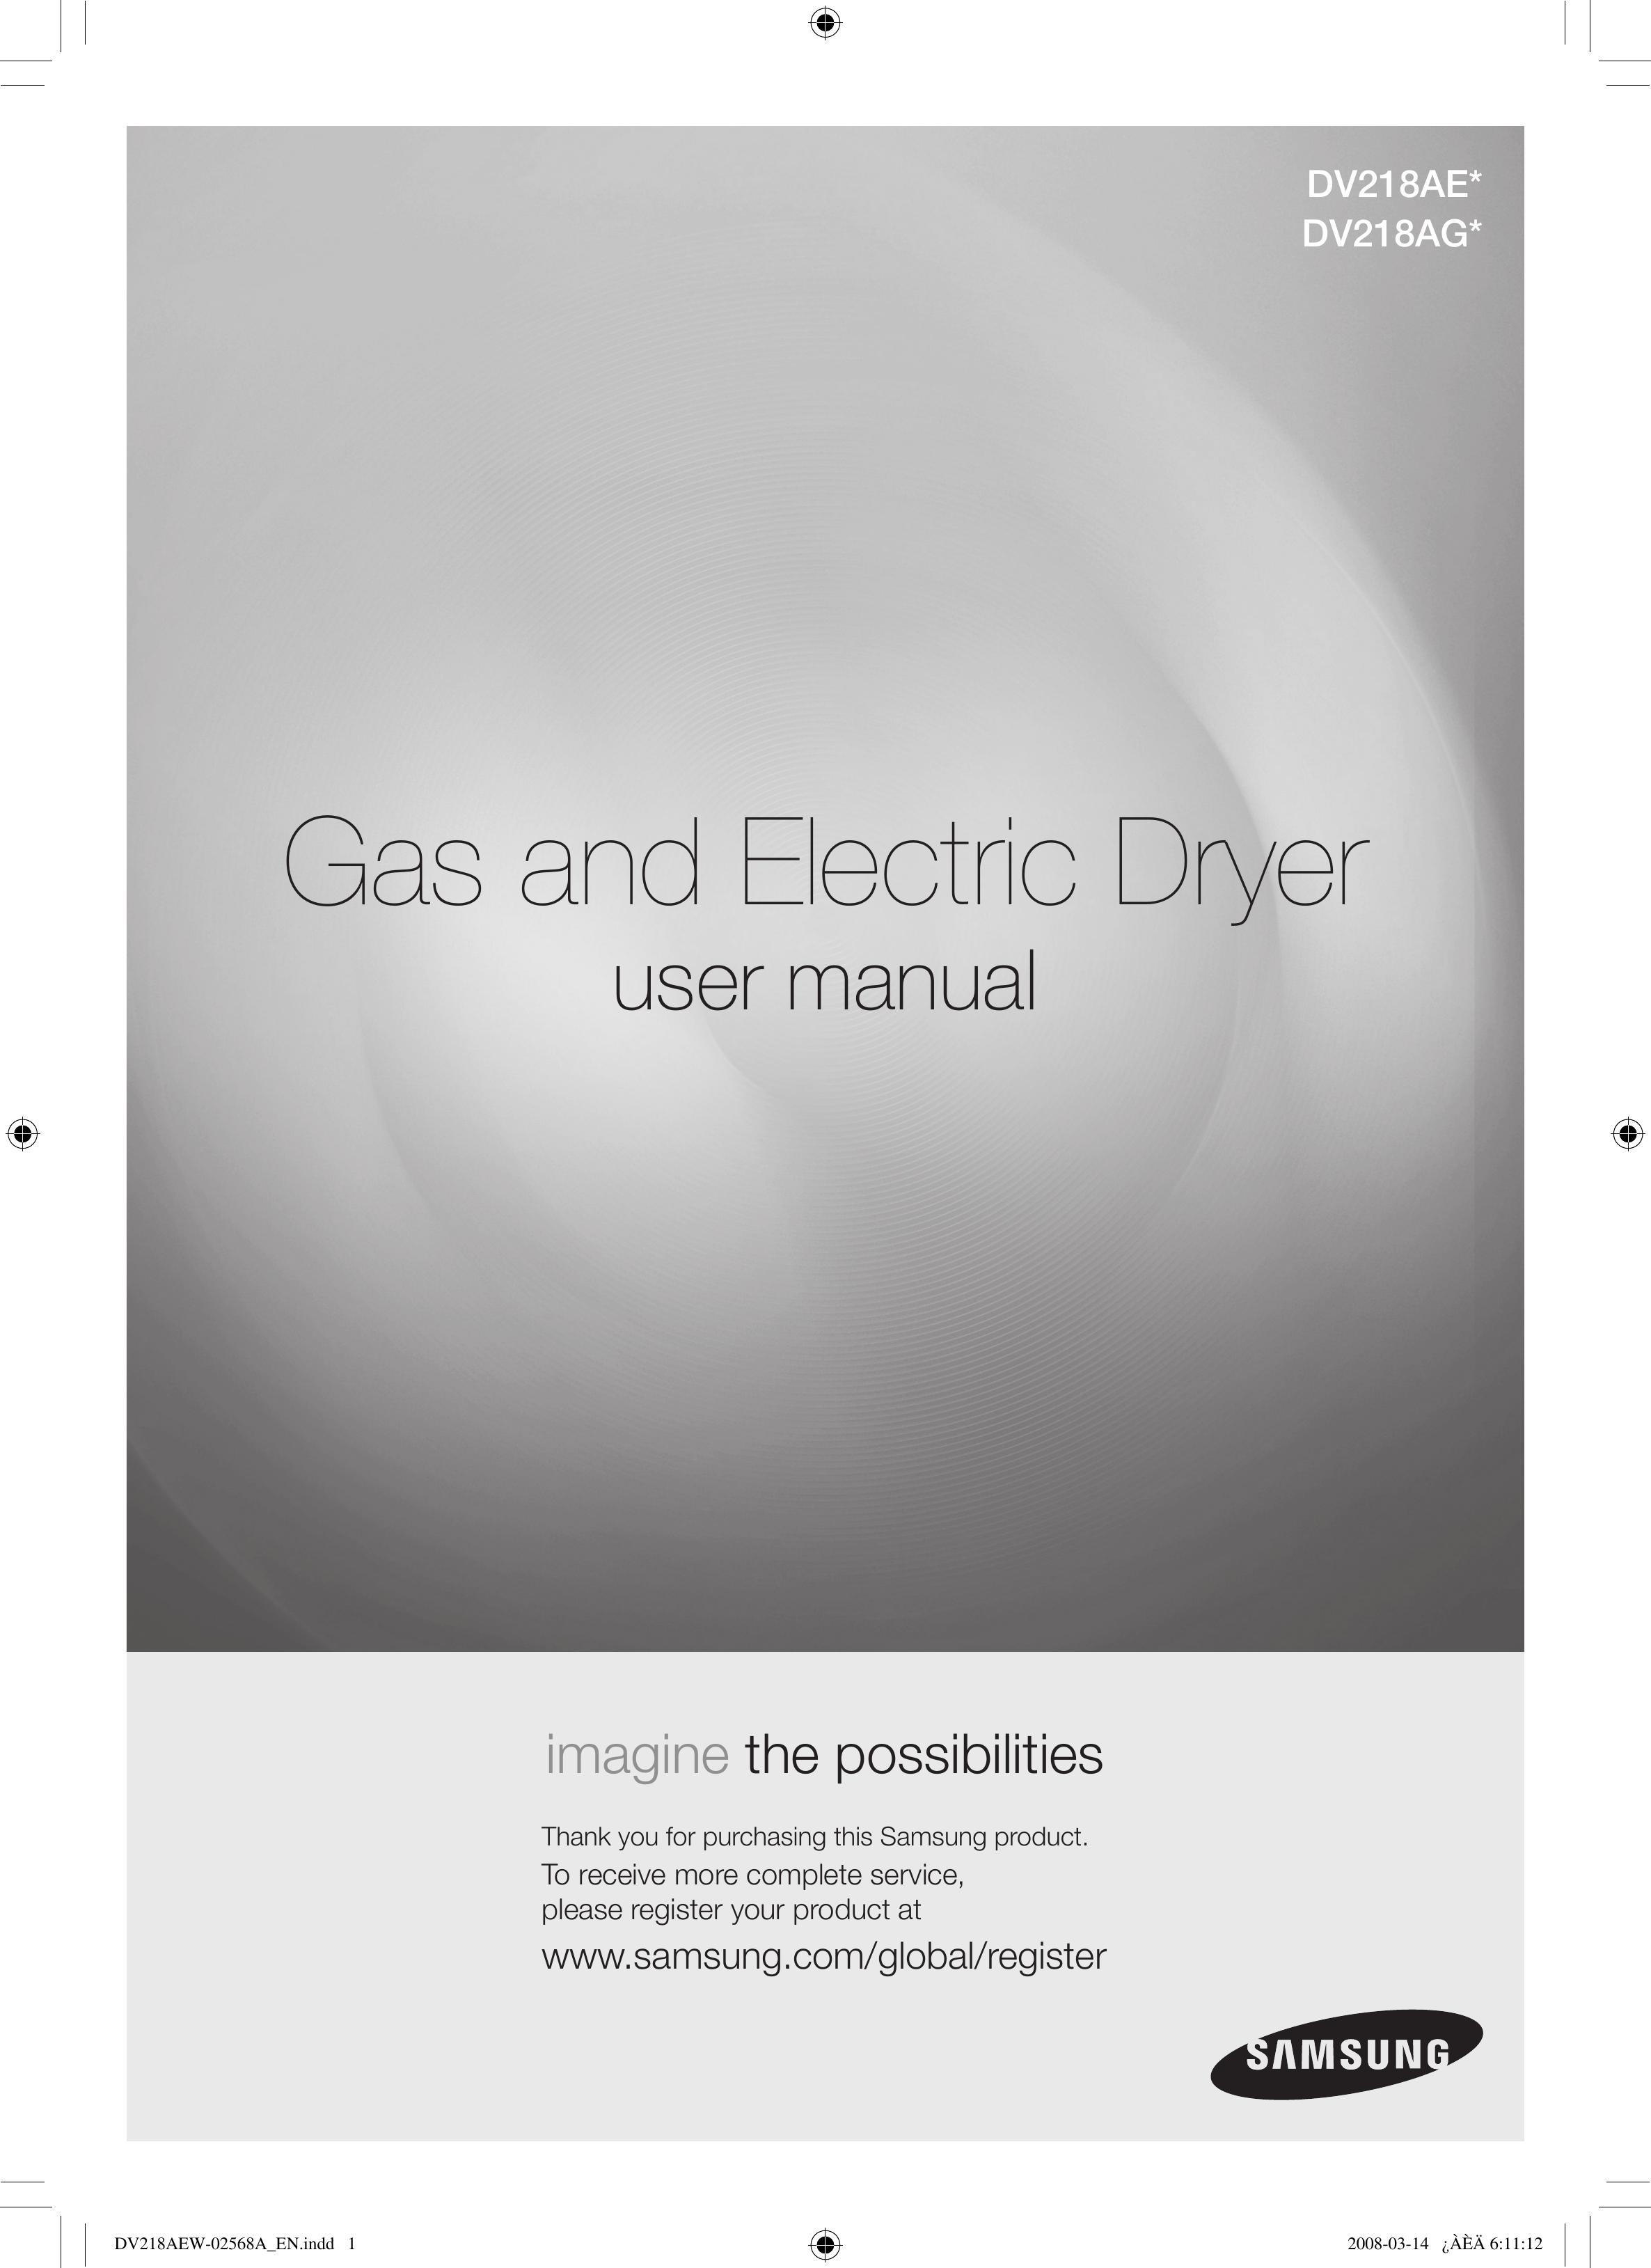 Samsung DV218AG Clothes Dryer User Manual